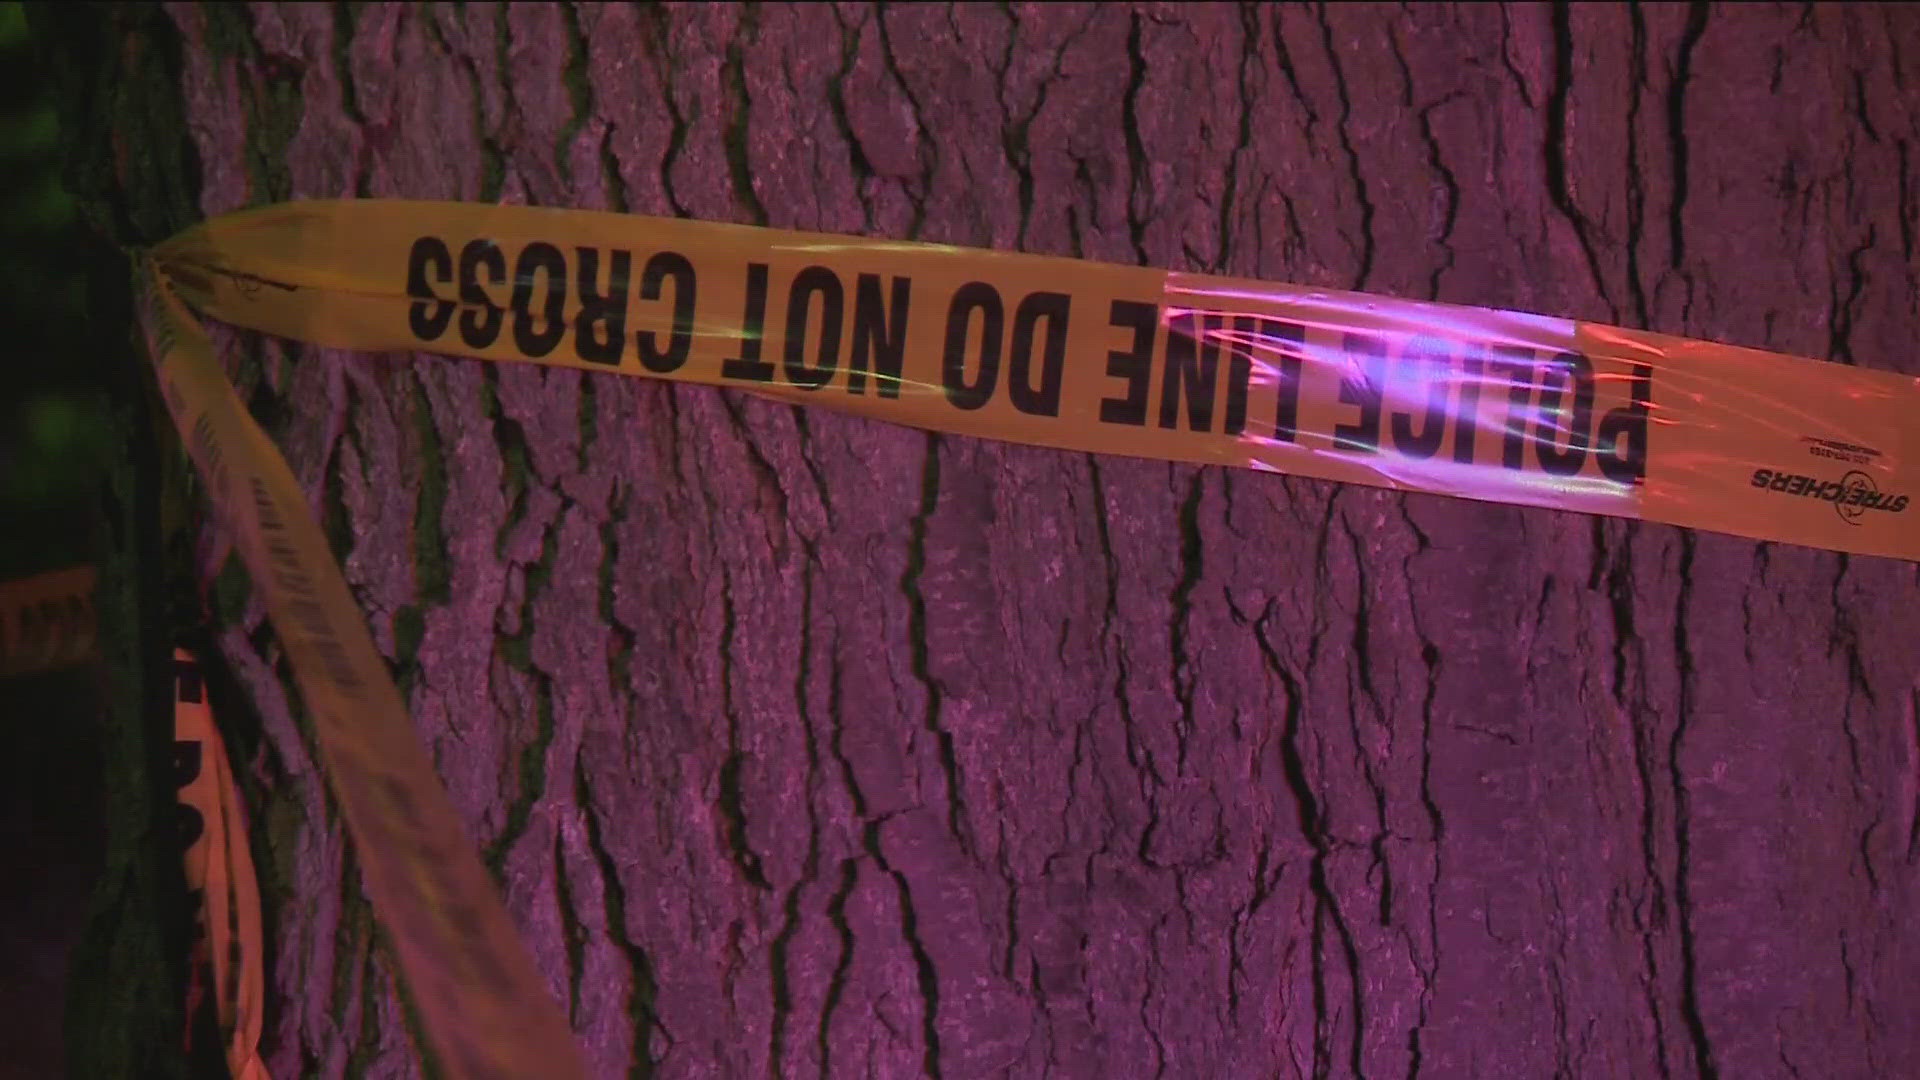 St. Paul police said the shooting occurred in the Payne-Phalen neighborhood.